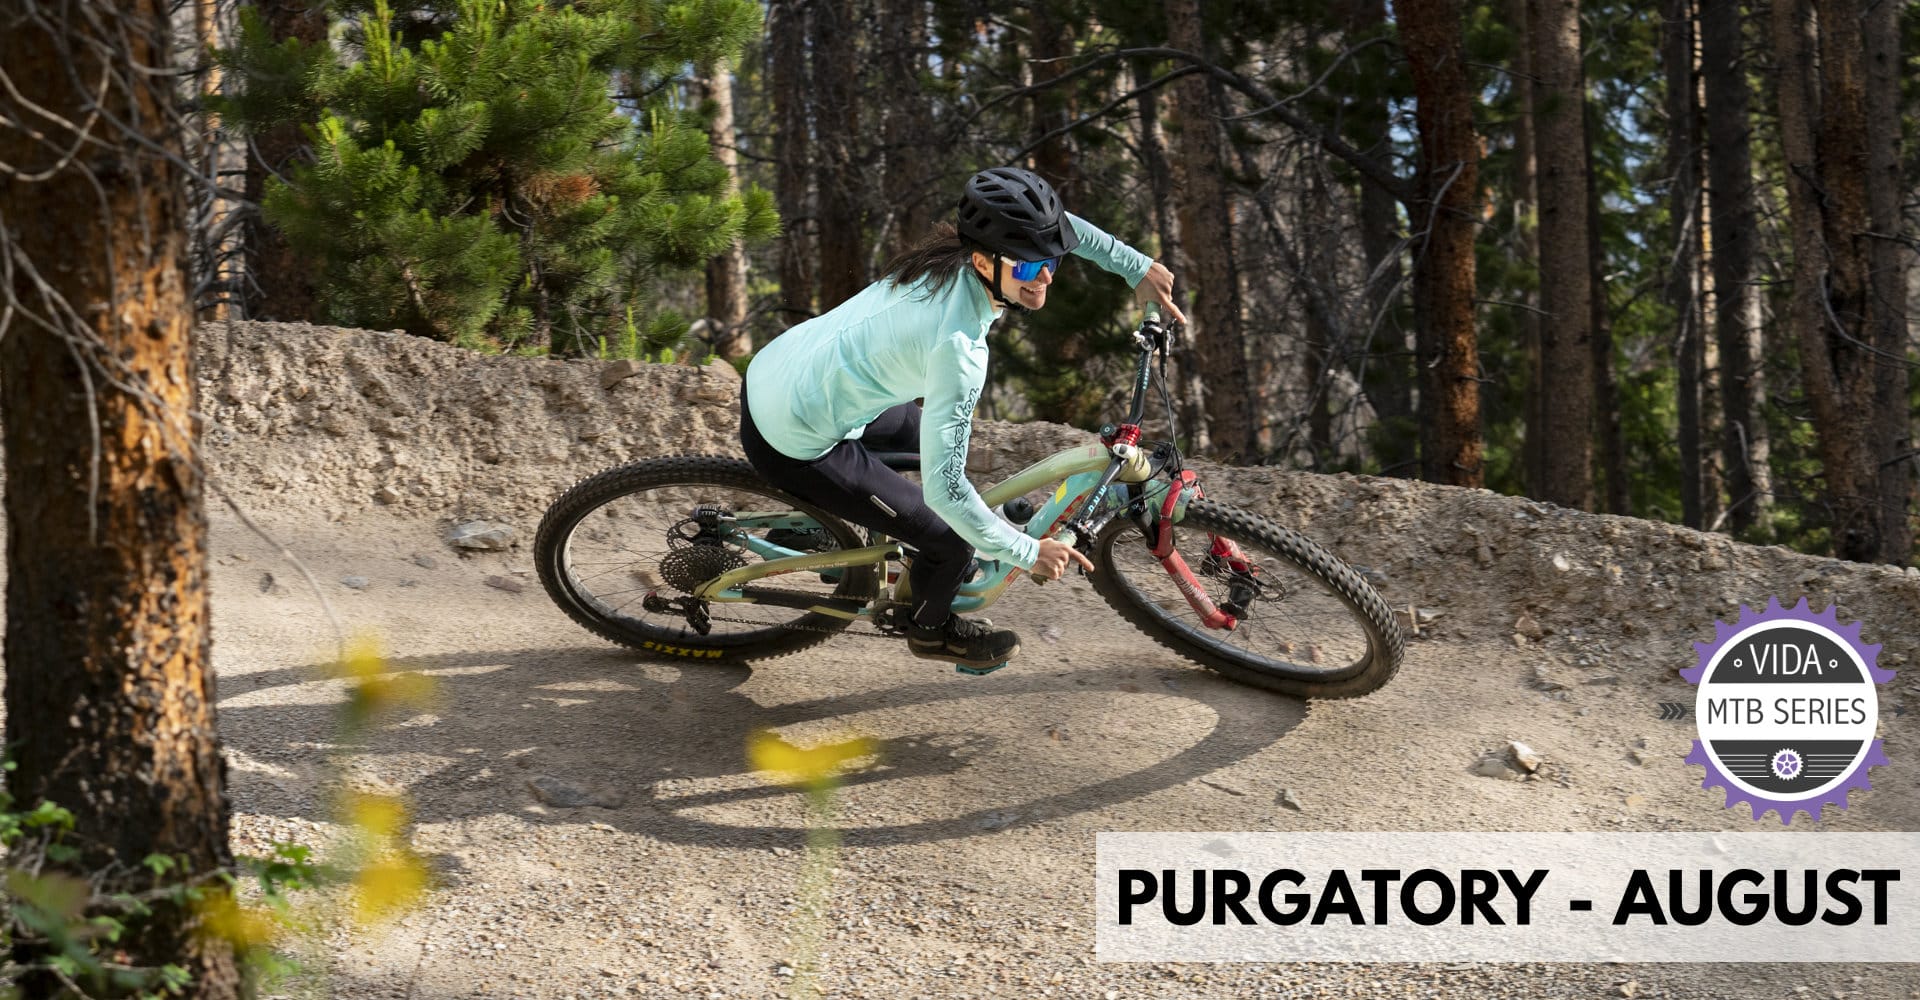 vntrbirds women's mountain bike downhill purgatory durango colorado